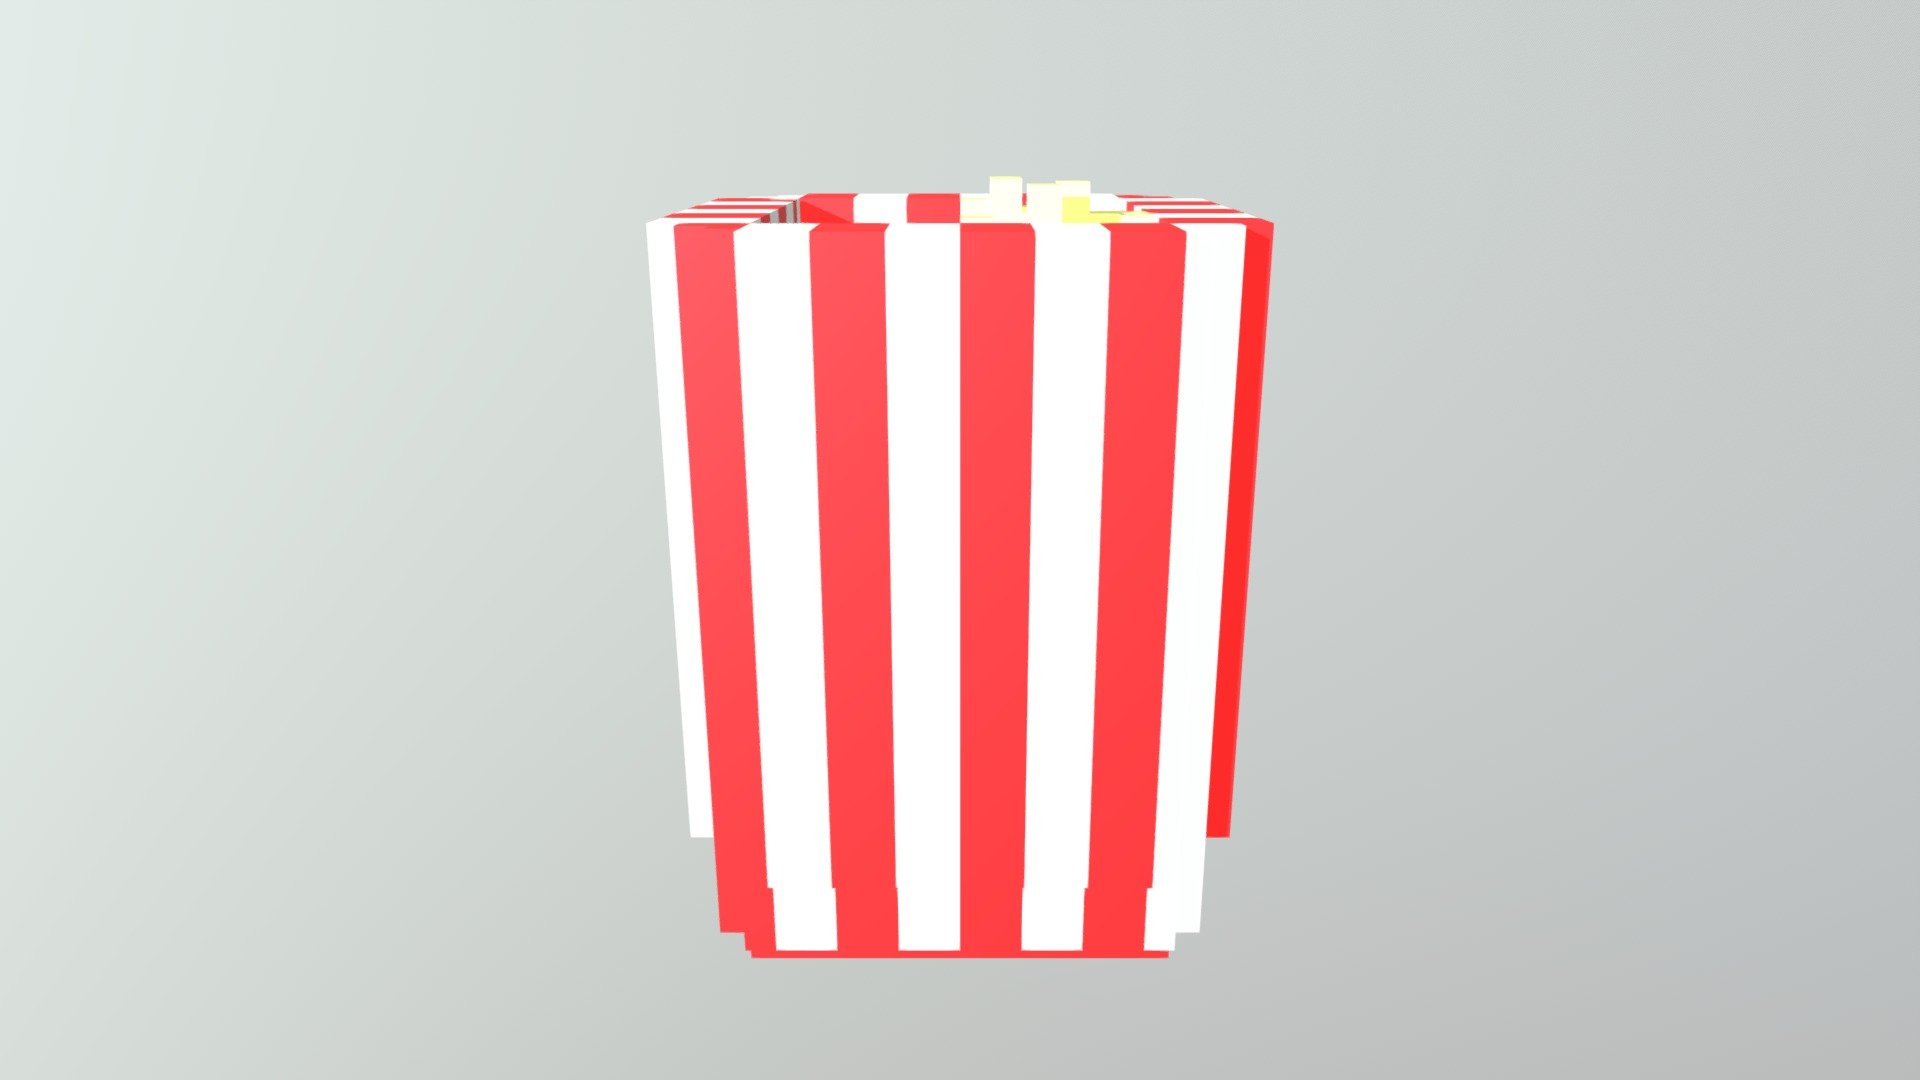 popcorn time se ve pixelado